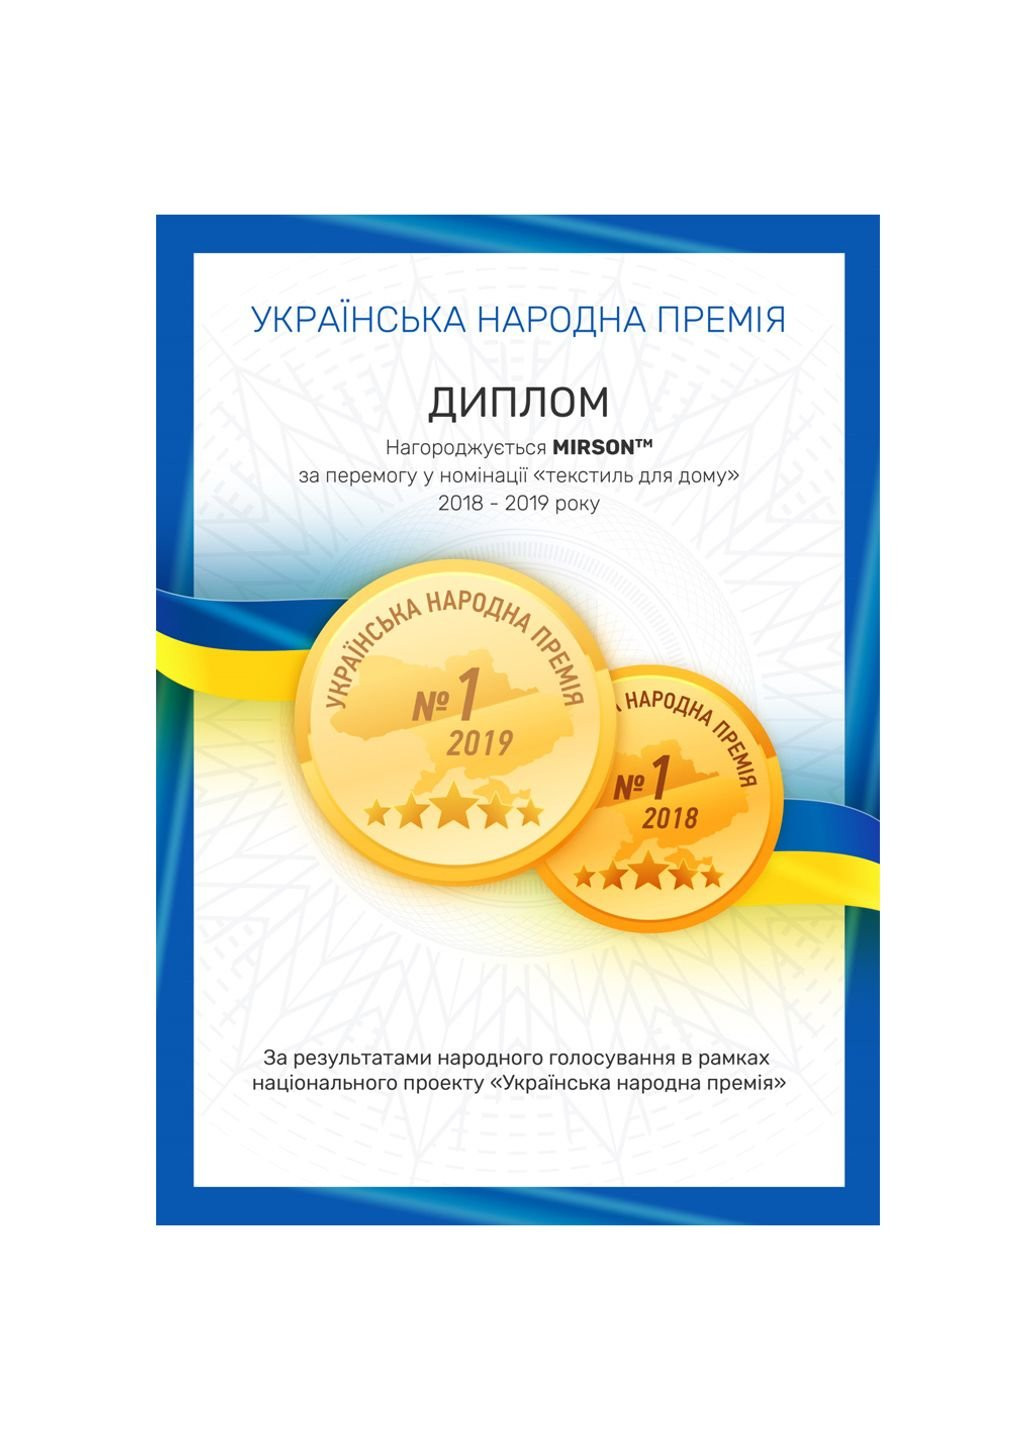 No Brand полотенце mirson банное №5001 softness brown 40x70 см (2200003181517) коричневый производство - Украина